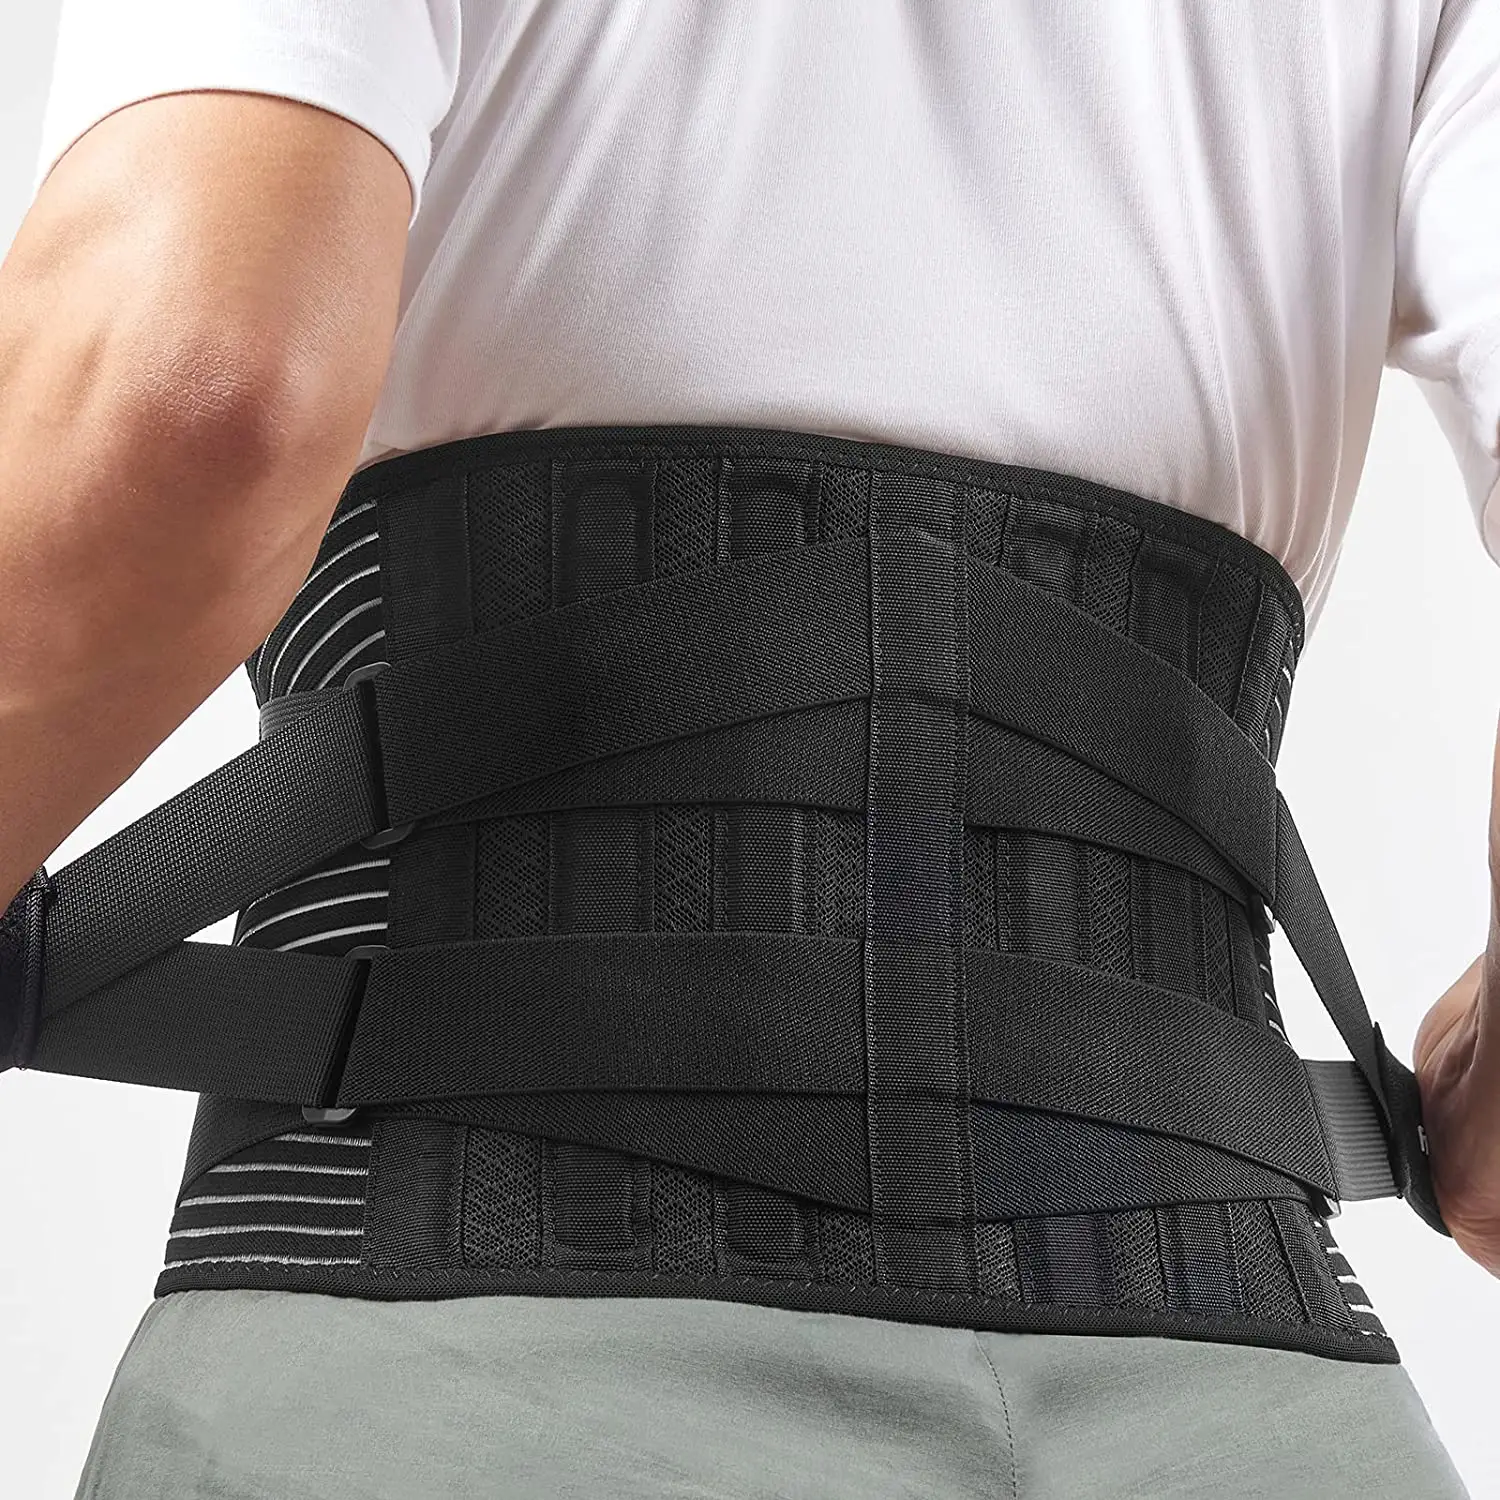 KSY Lower Lumbar Back Support Belt Lower Back Pain Relief Back Brace Waist Support For Women And Men